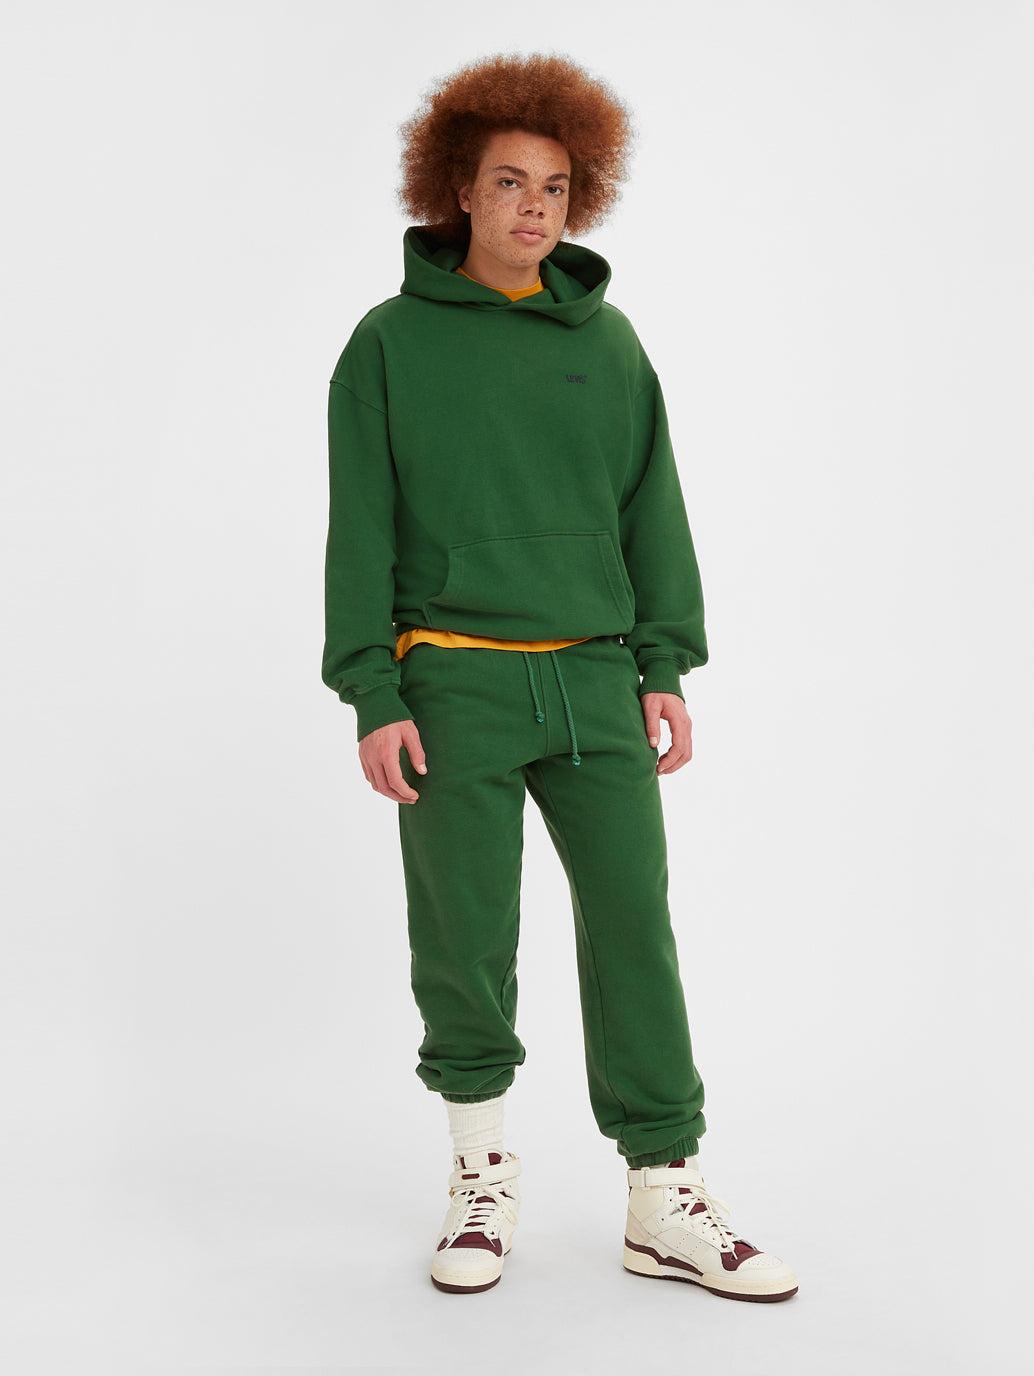 men's-gold-tab-green-sweatpants